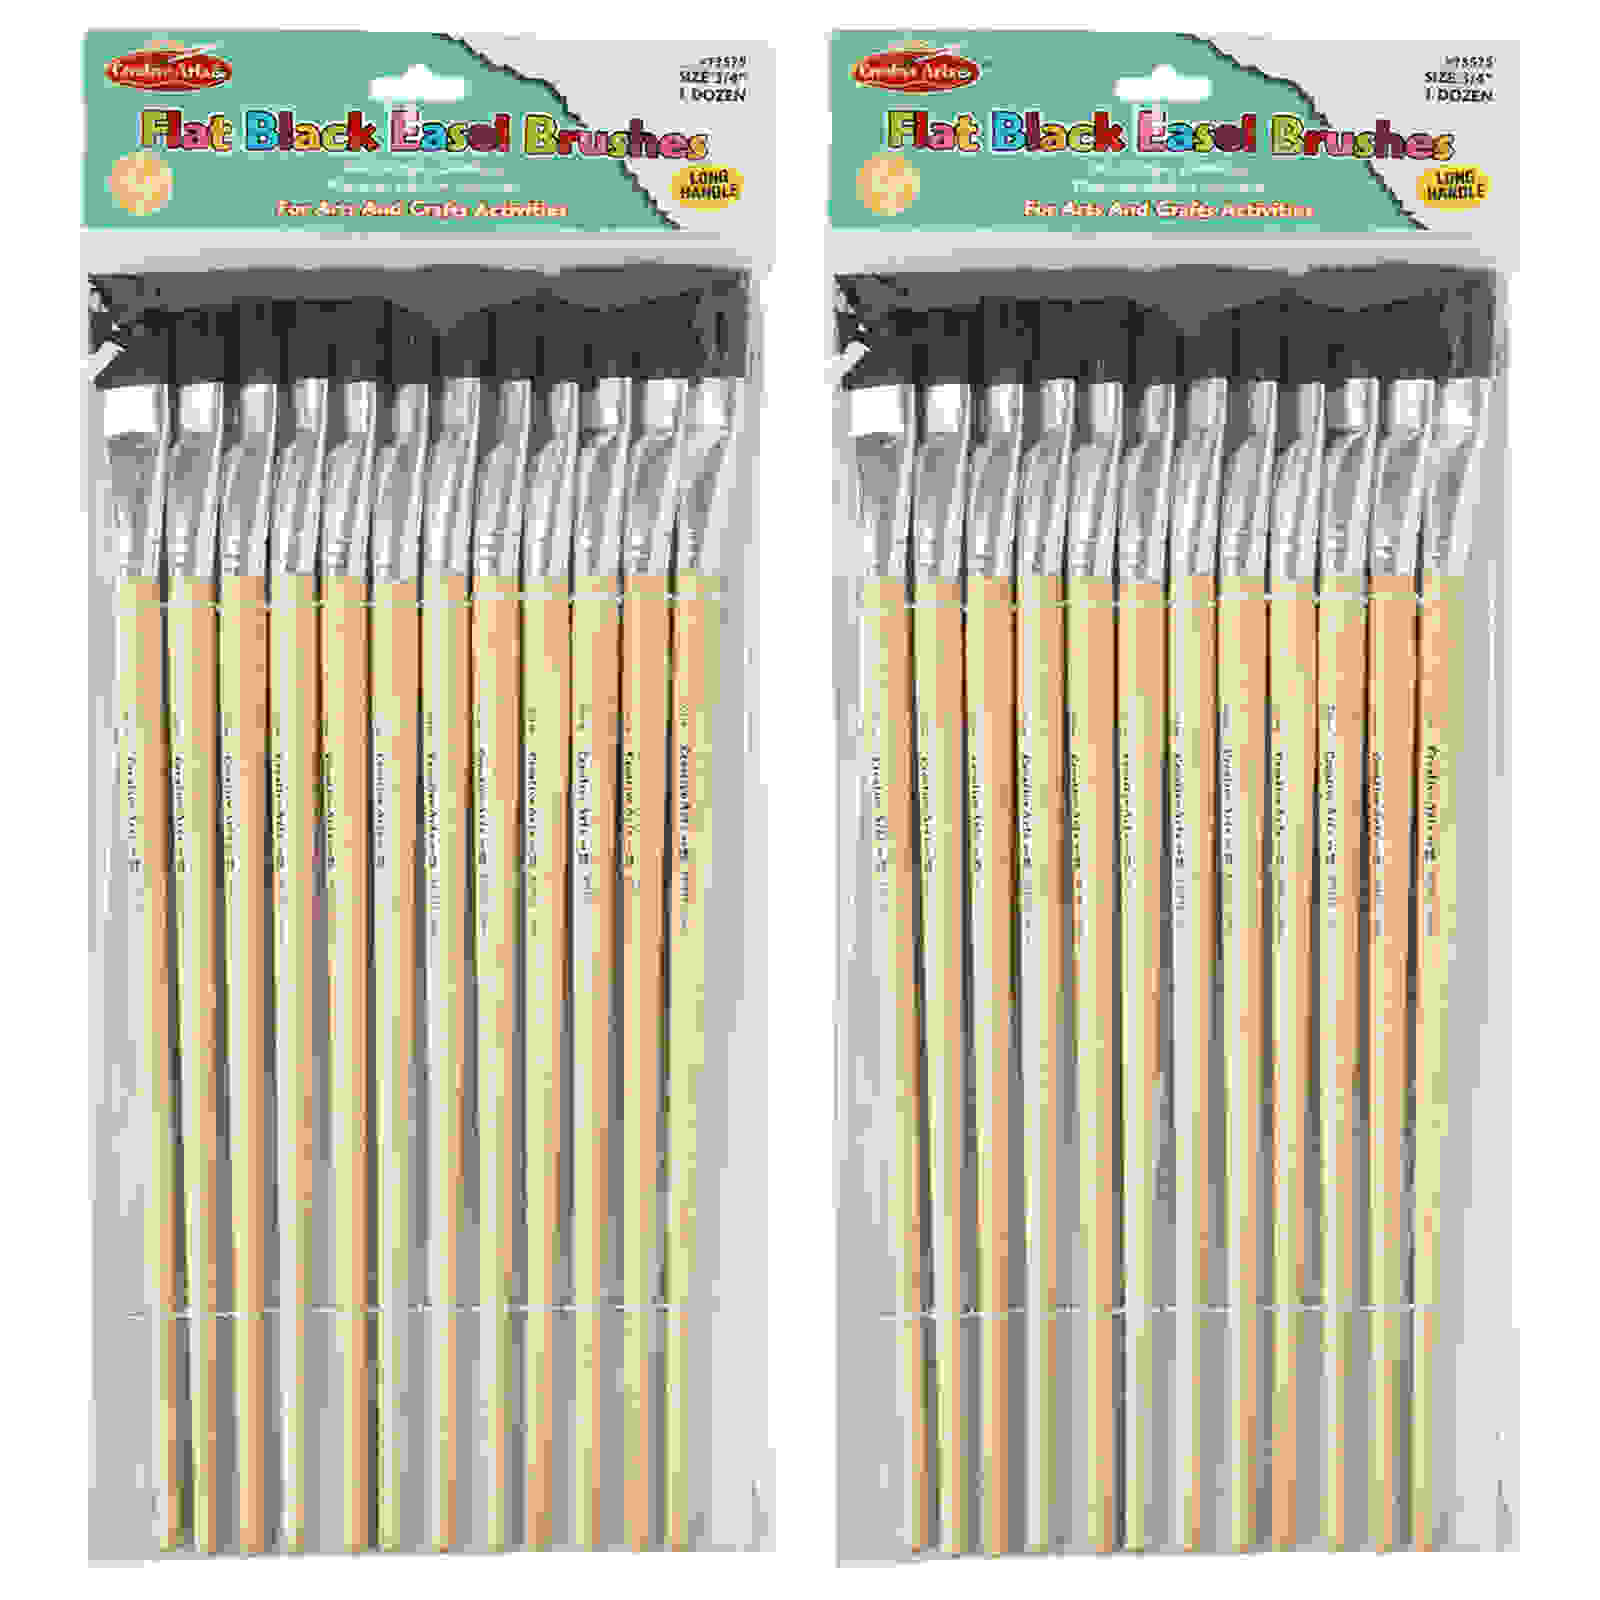 Creative Arts Flat Easel Brushes, 3/4" Bristle, Black, 12 Per Pack, 2 Packs